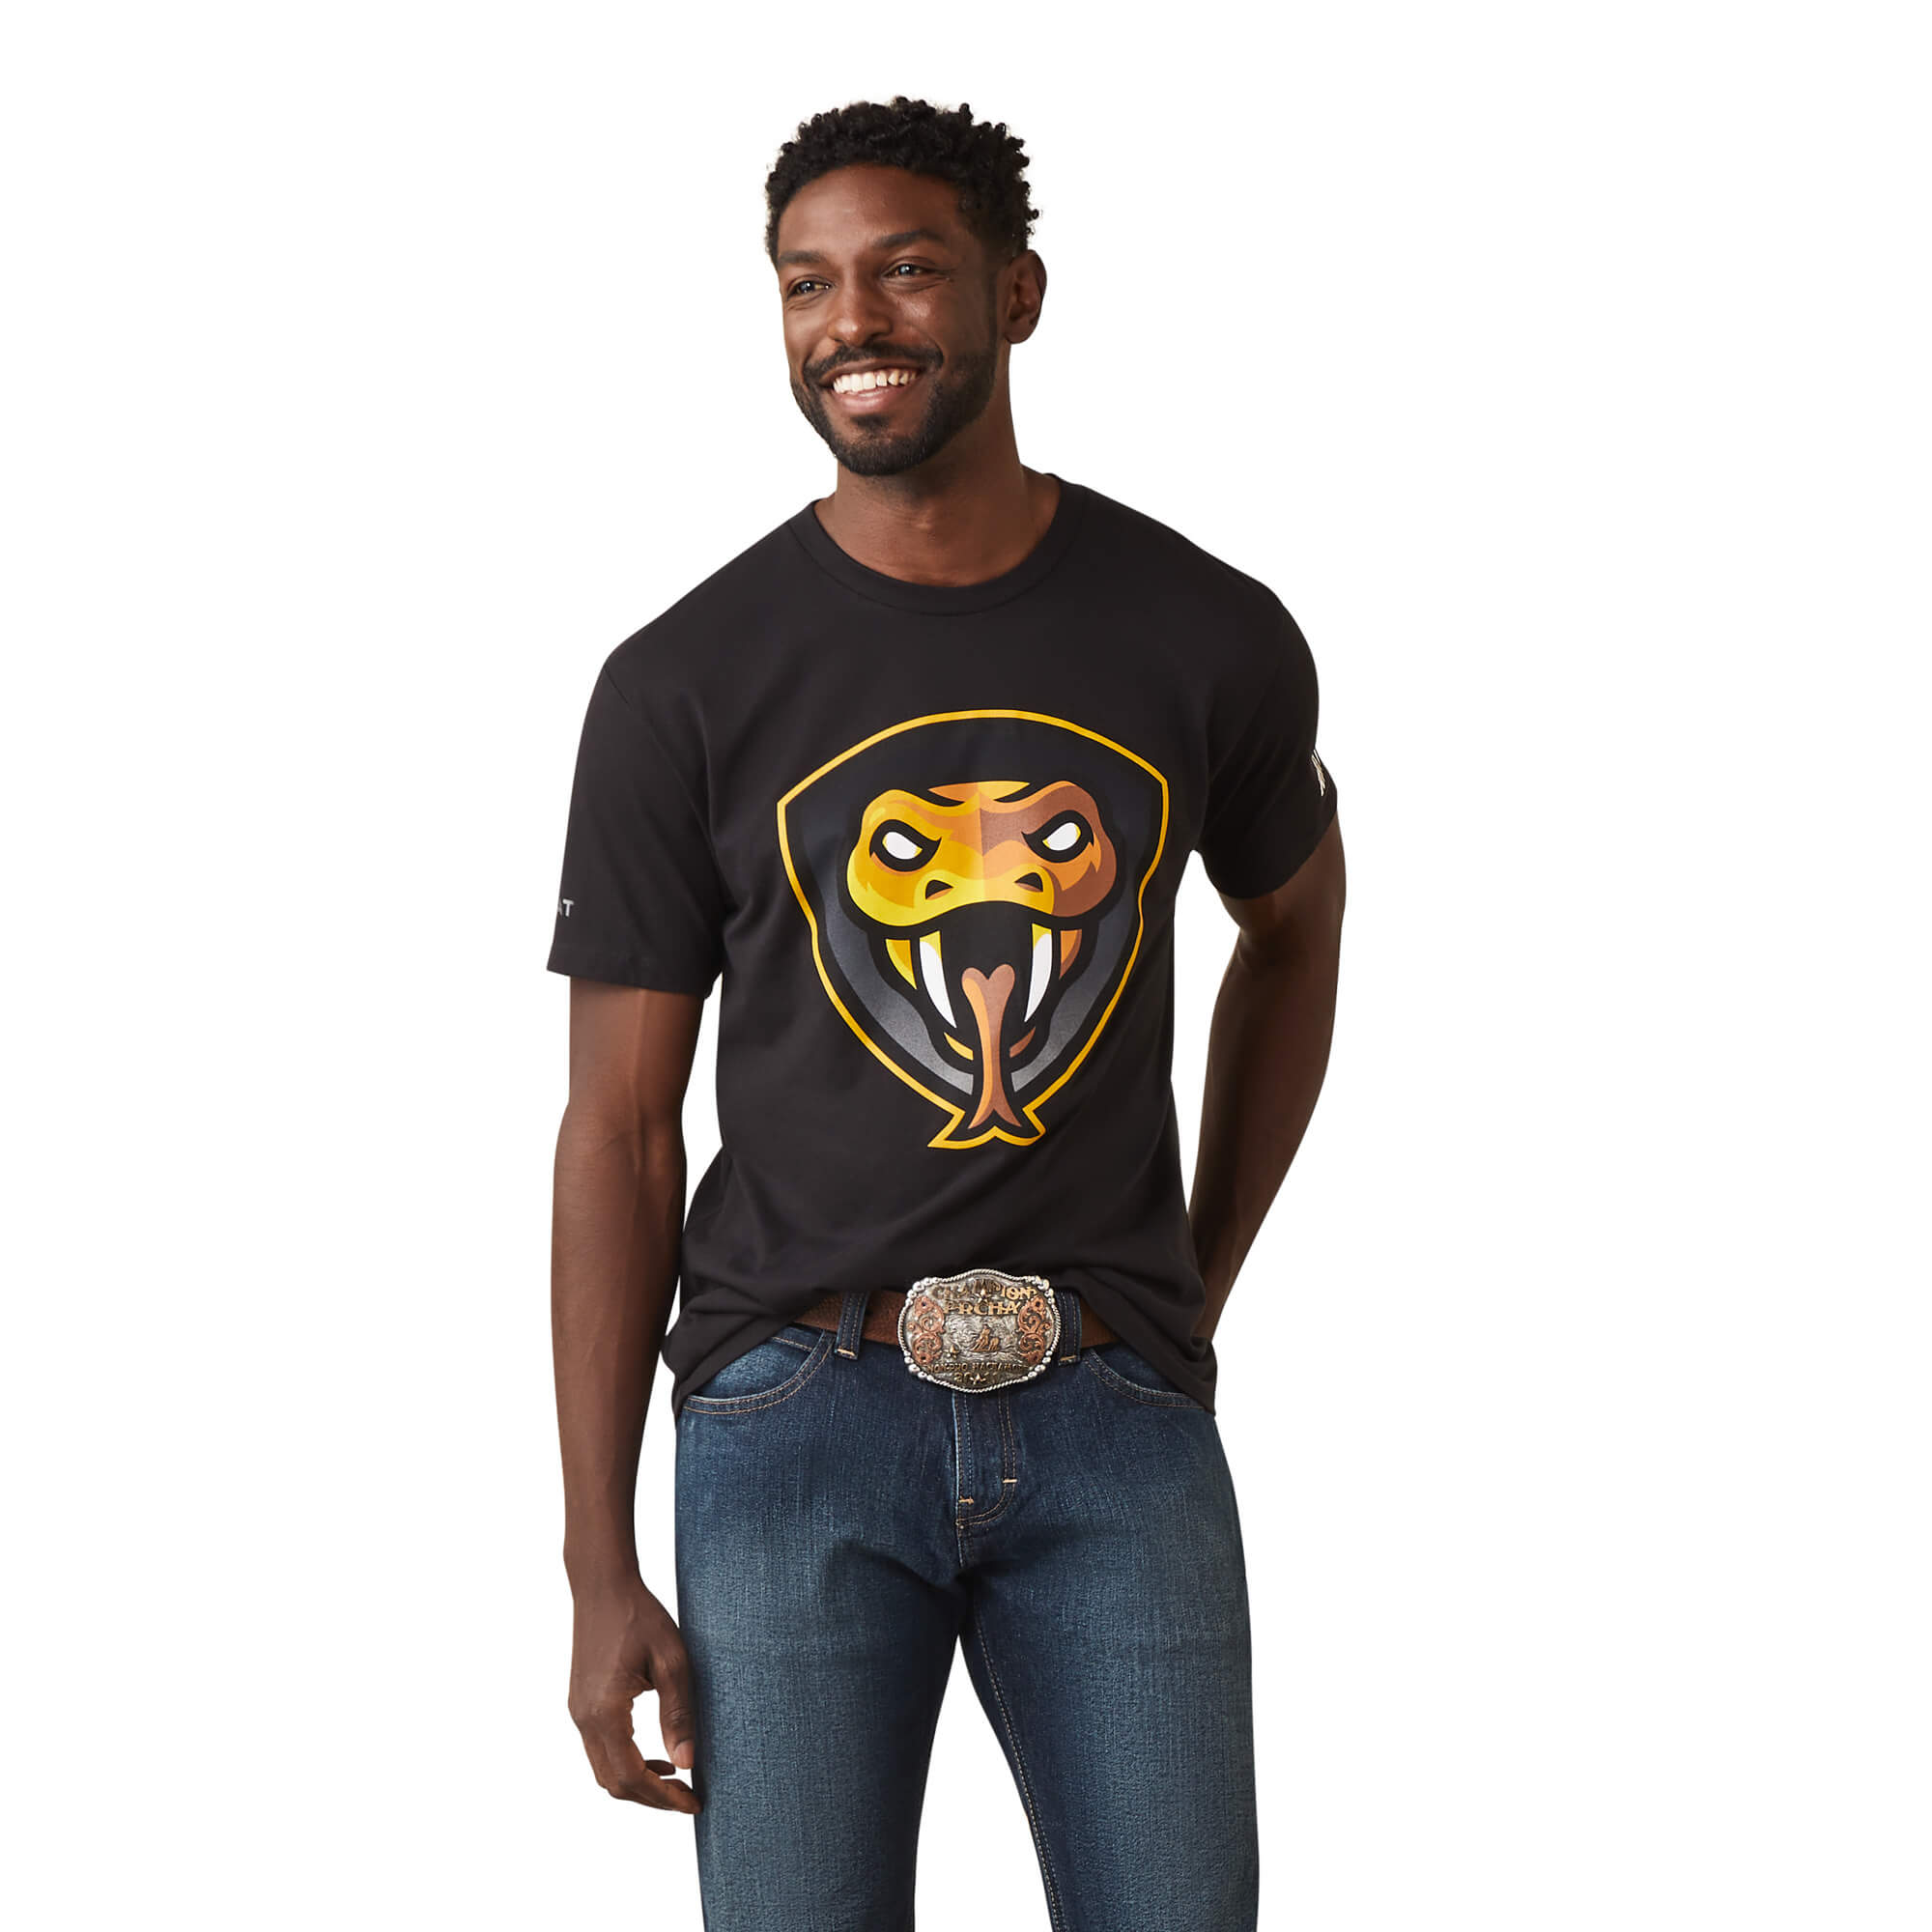 Men's Rattlers Head T-Shirt in Black Cotton, Size: Medium by Ariat